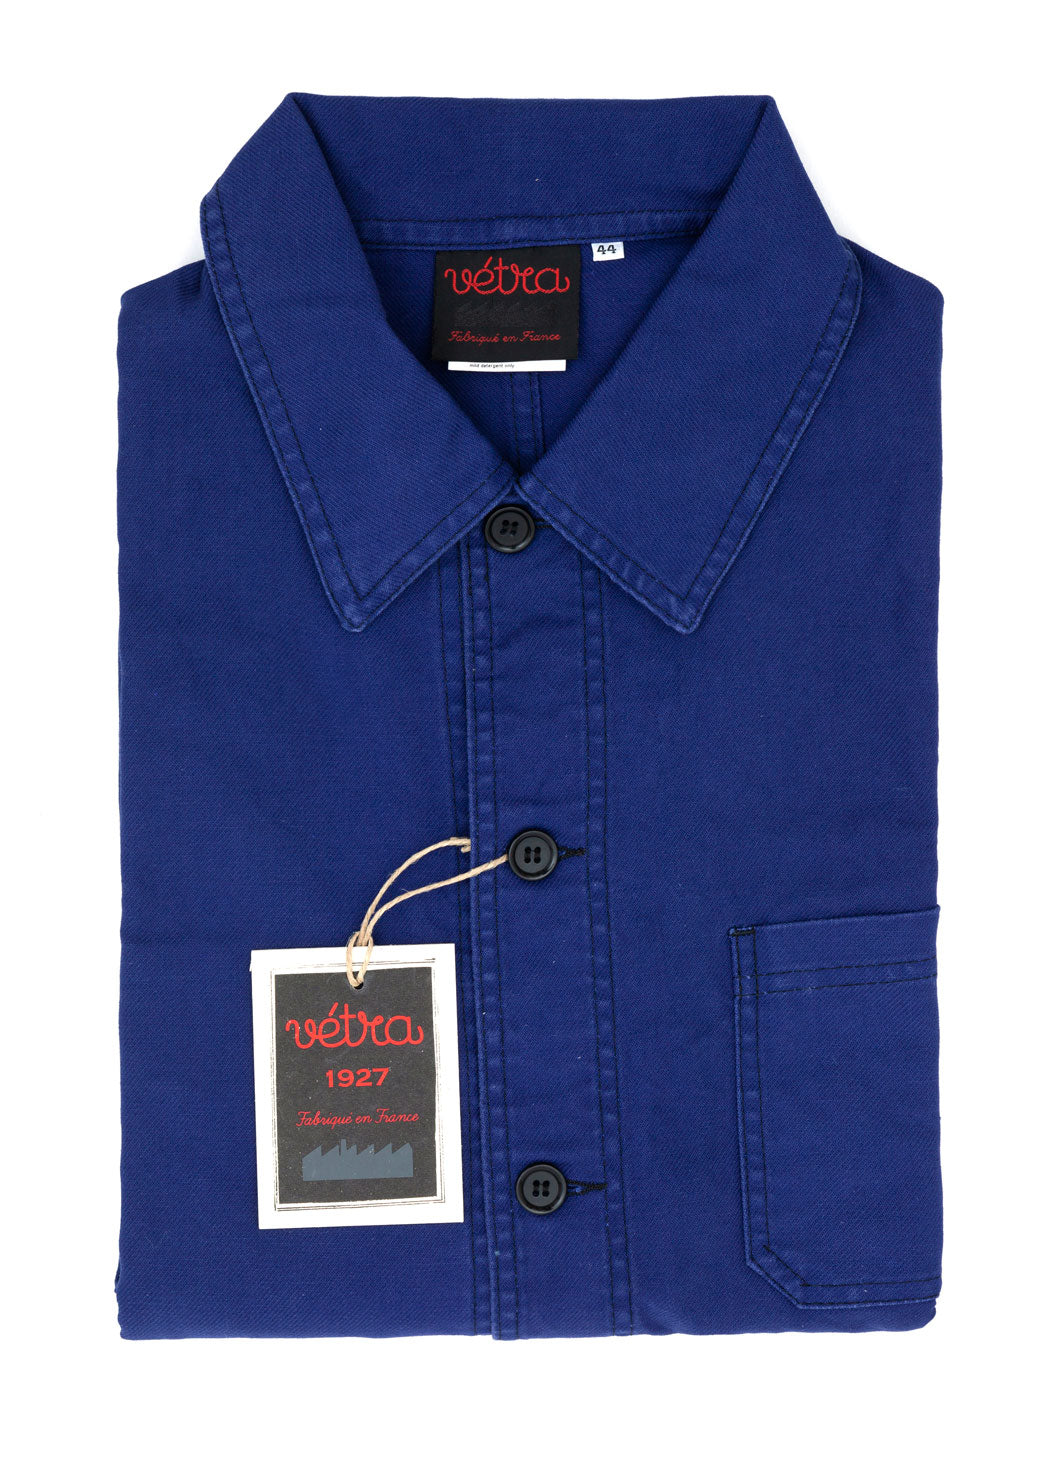 Vetra - French Work-Wear - Jacket 4 - Hydrone Blue - Regent Tailoring